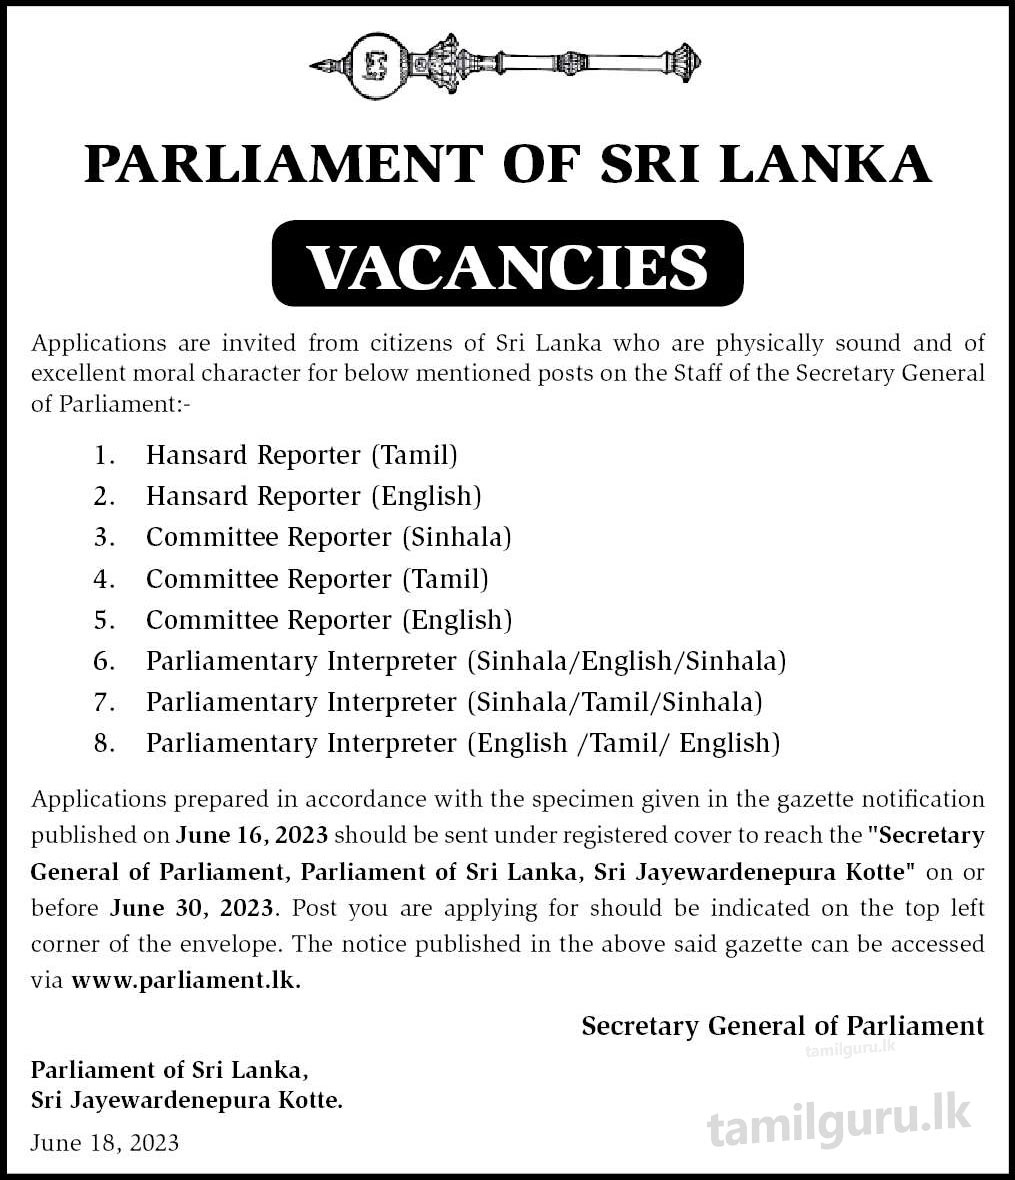 Parliament Vacancies (2023 June) - Hansard Reporter, Committee Reporter, Parliamentary Interpreter